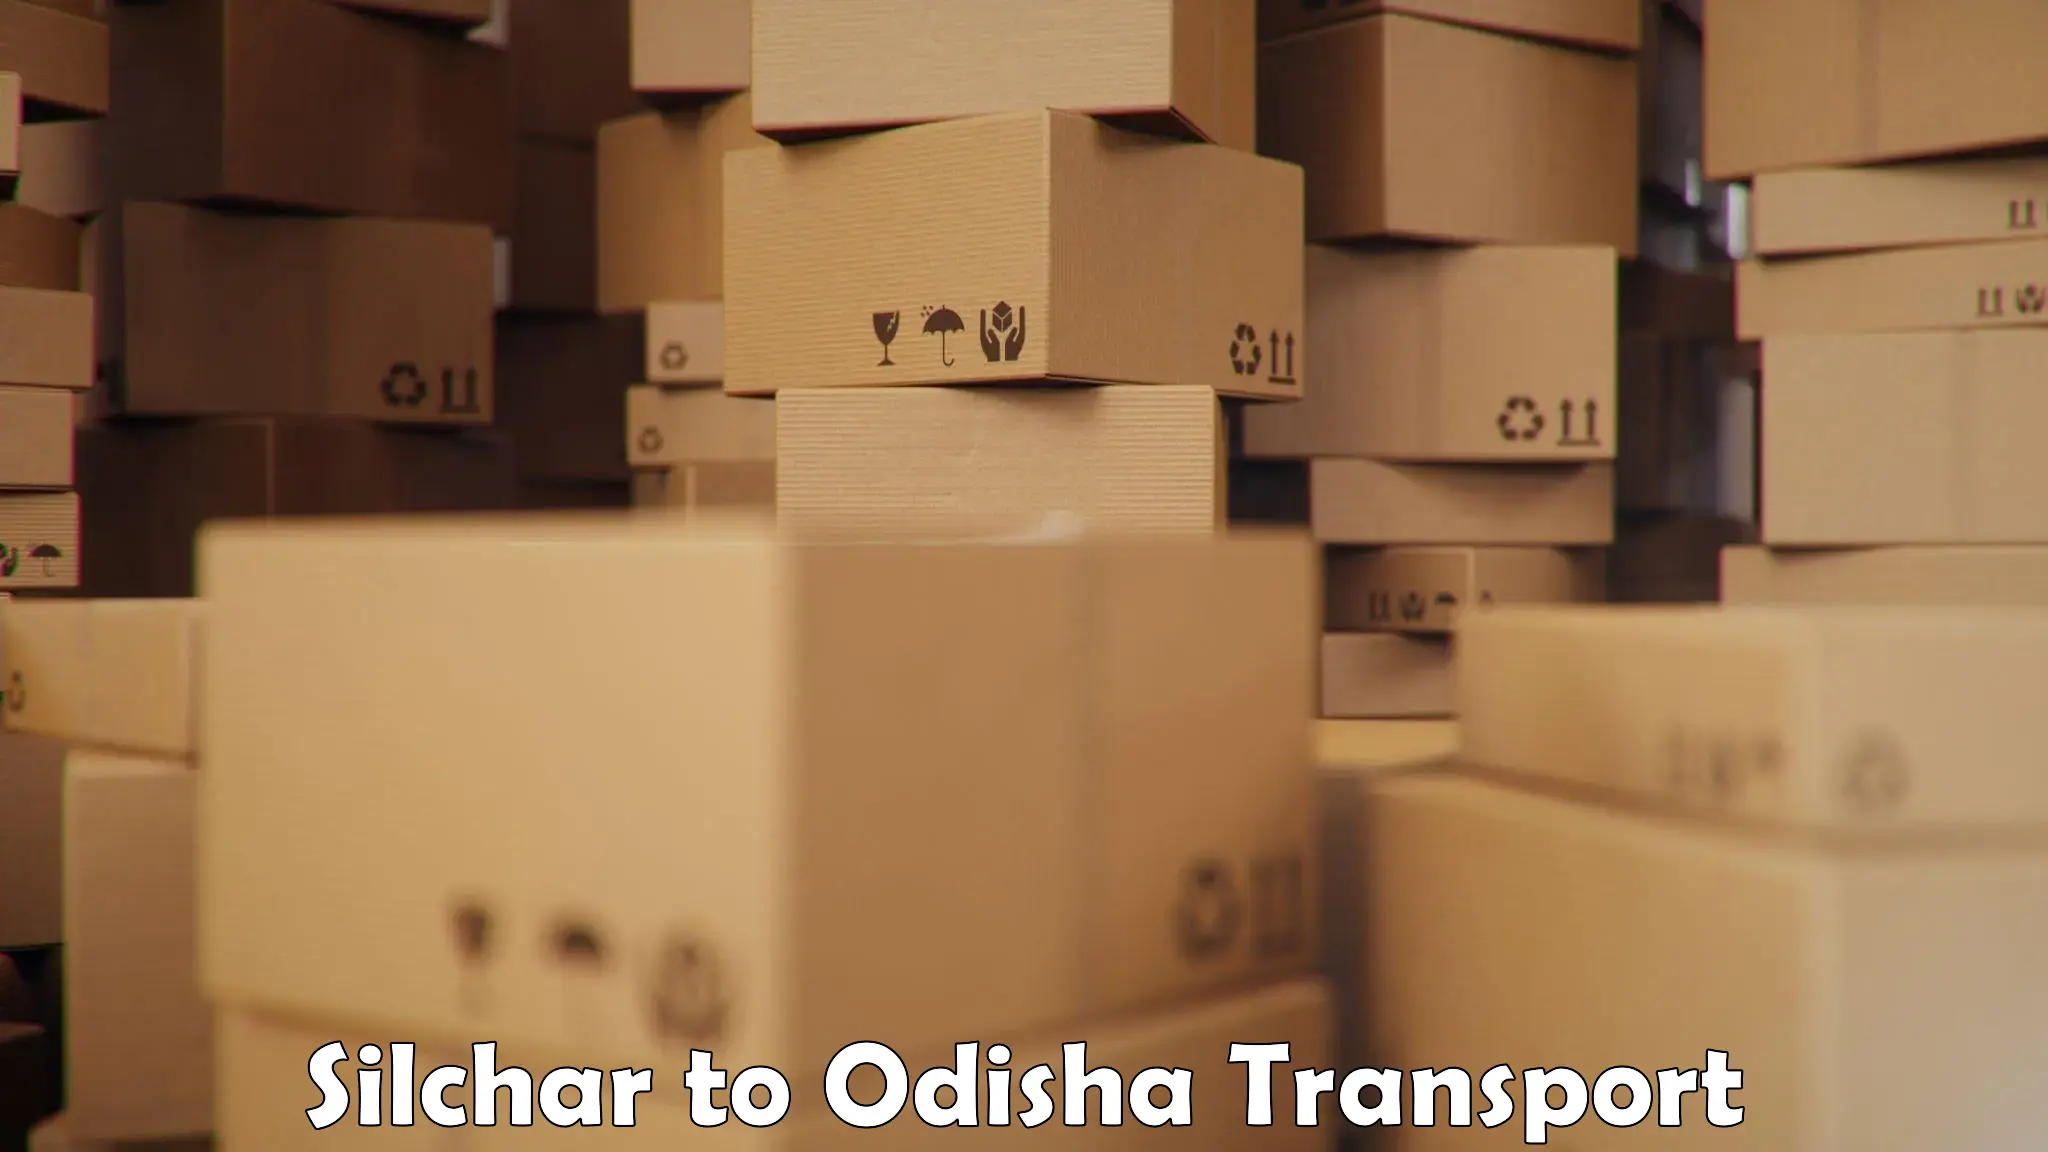 Furniture transport service Silchar to Ghuntagadia